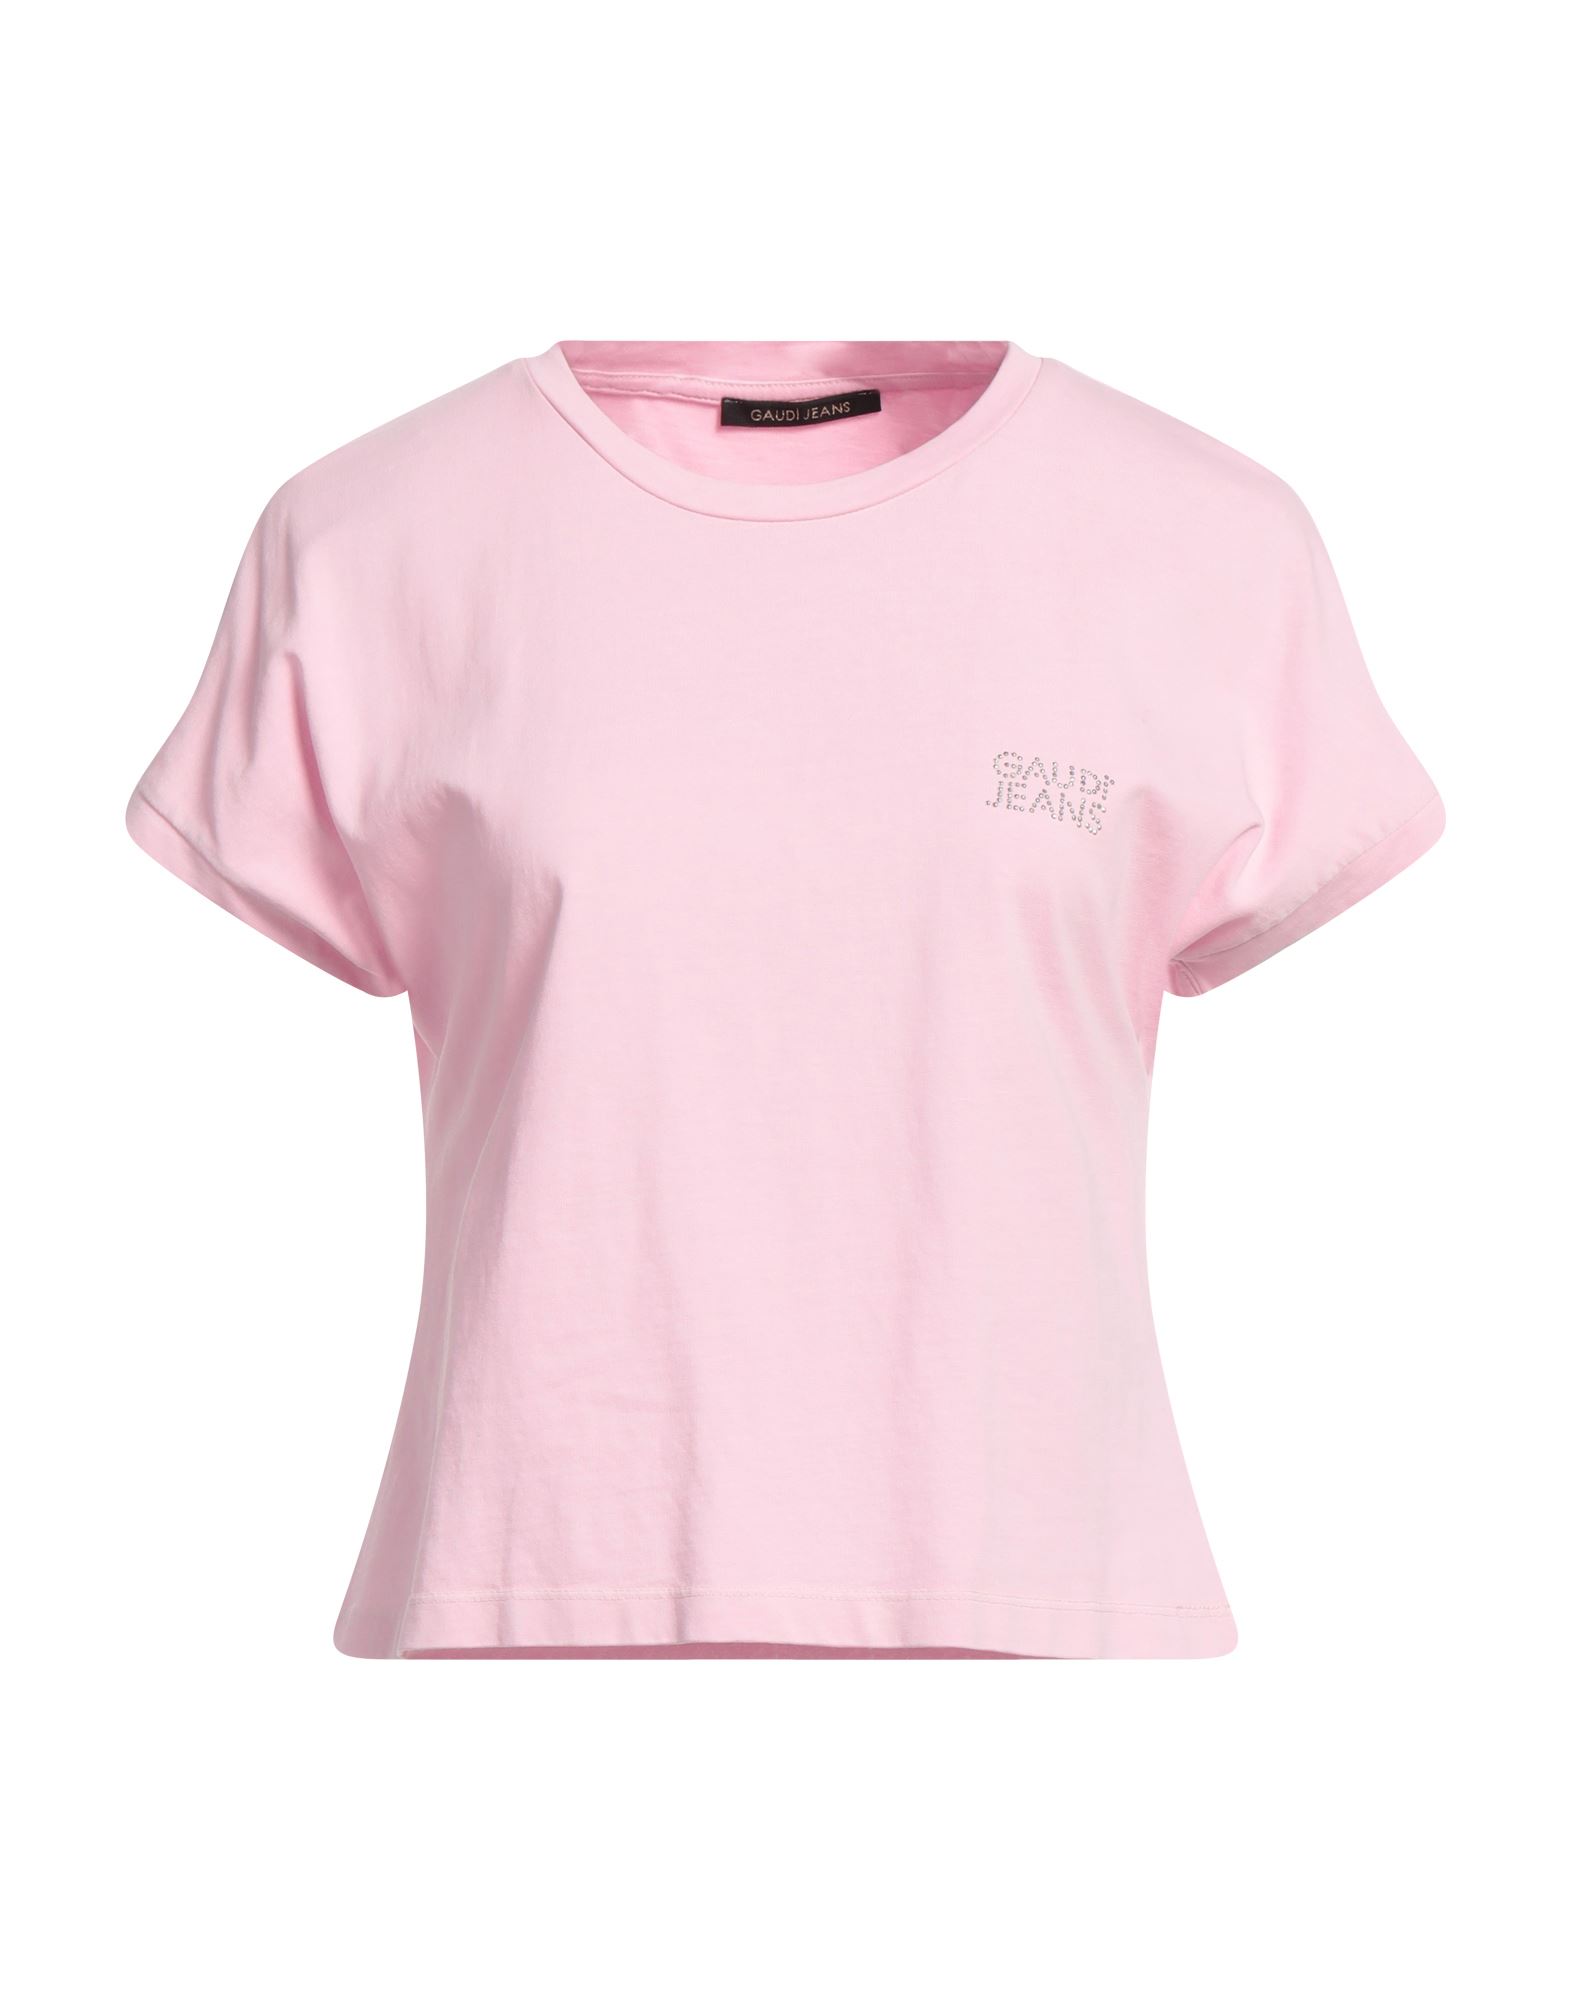 Gaudì Woman T-shirt Pink Size M Cotton